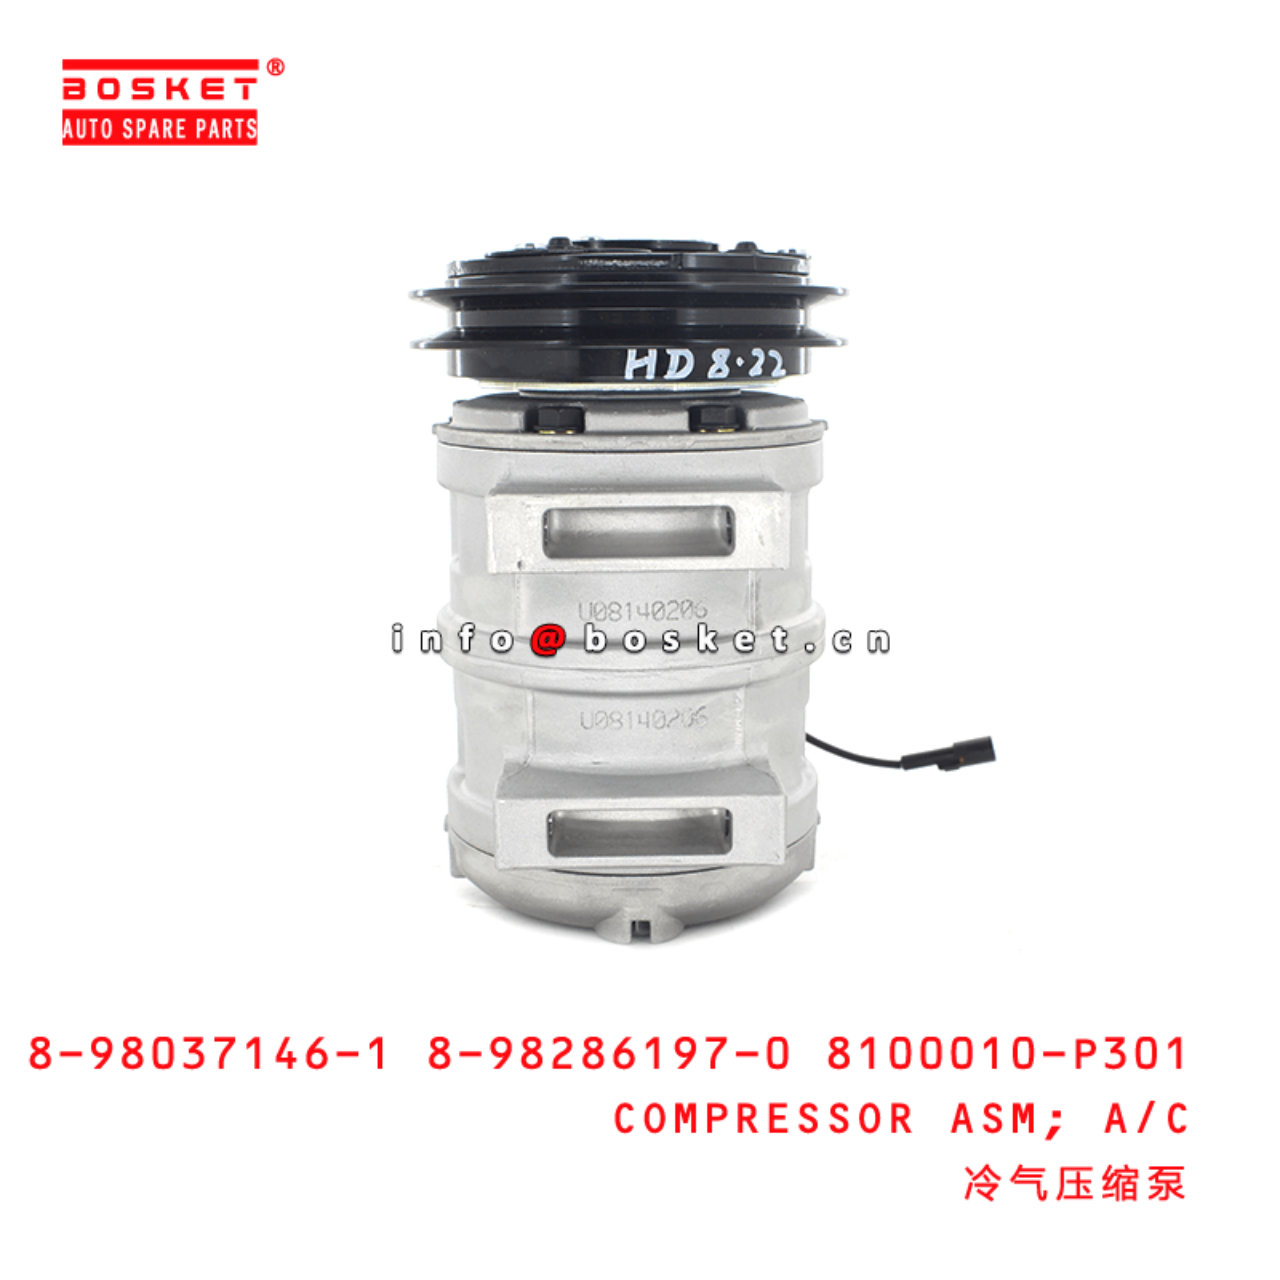 8-98037146-1 8-98286197-0 8100010-P301 Air Compression Compressor Assembly Suitable for ISUZU 700P 4